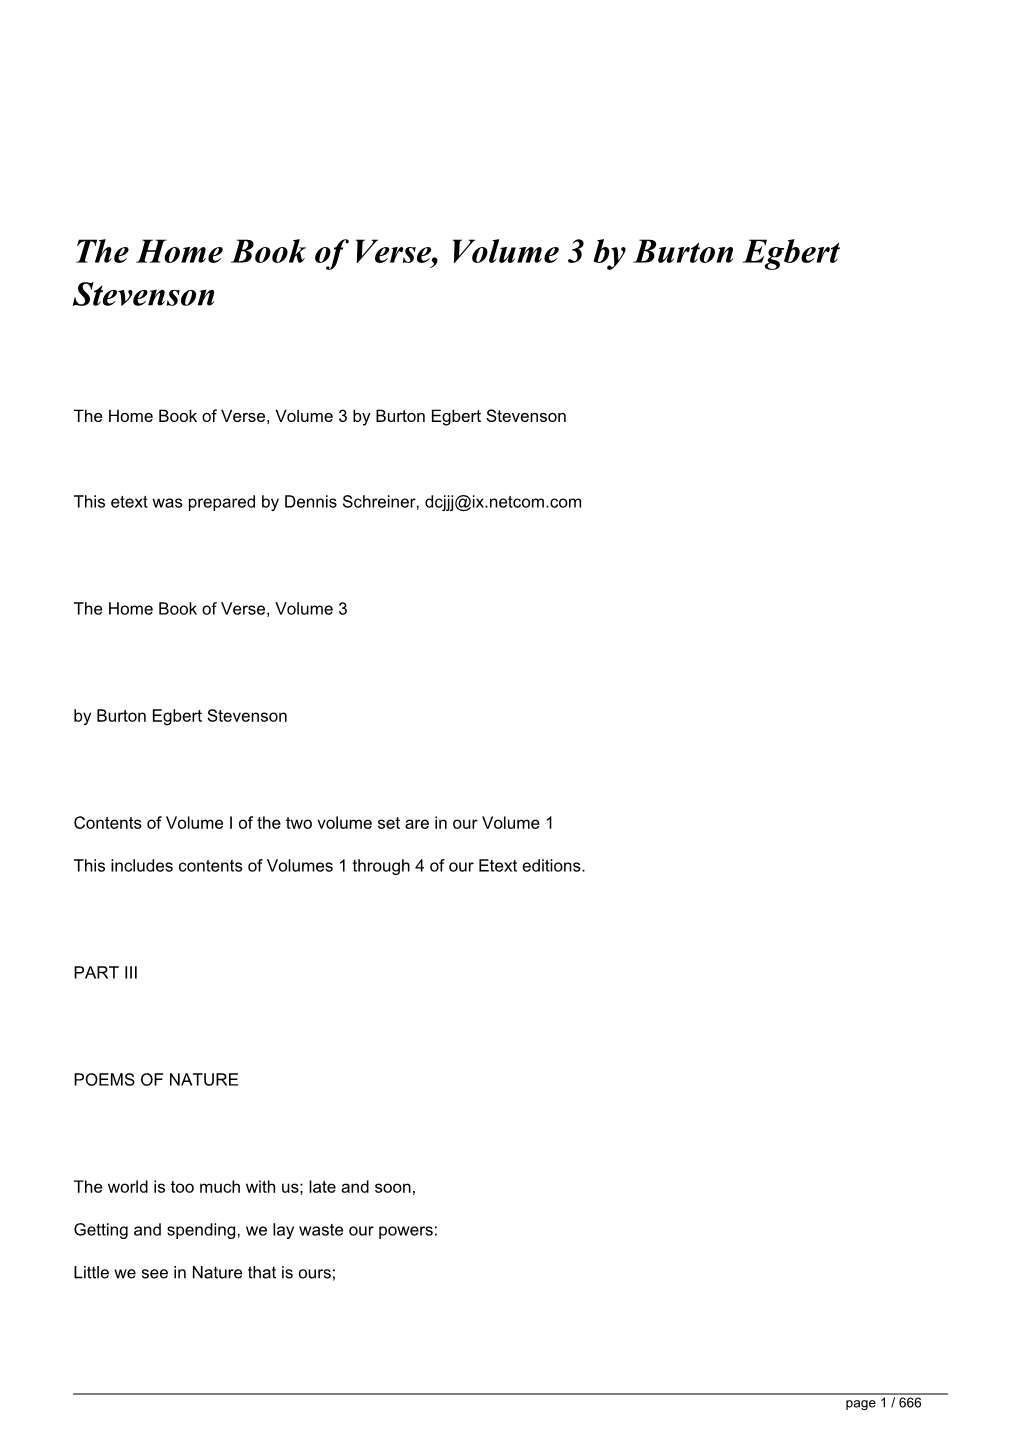 &lt;H1&gt;The Home Book of Verse, Volume 3 by Burton Egbert Stevenson&lt;/H1&gt;